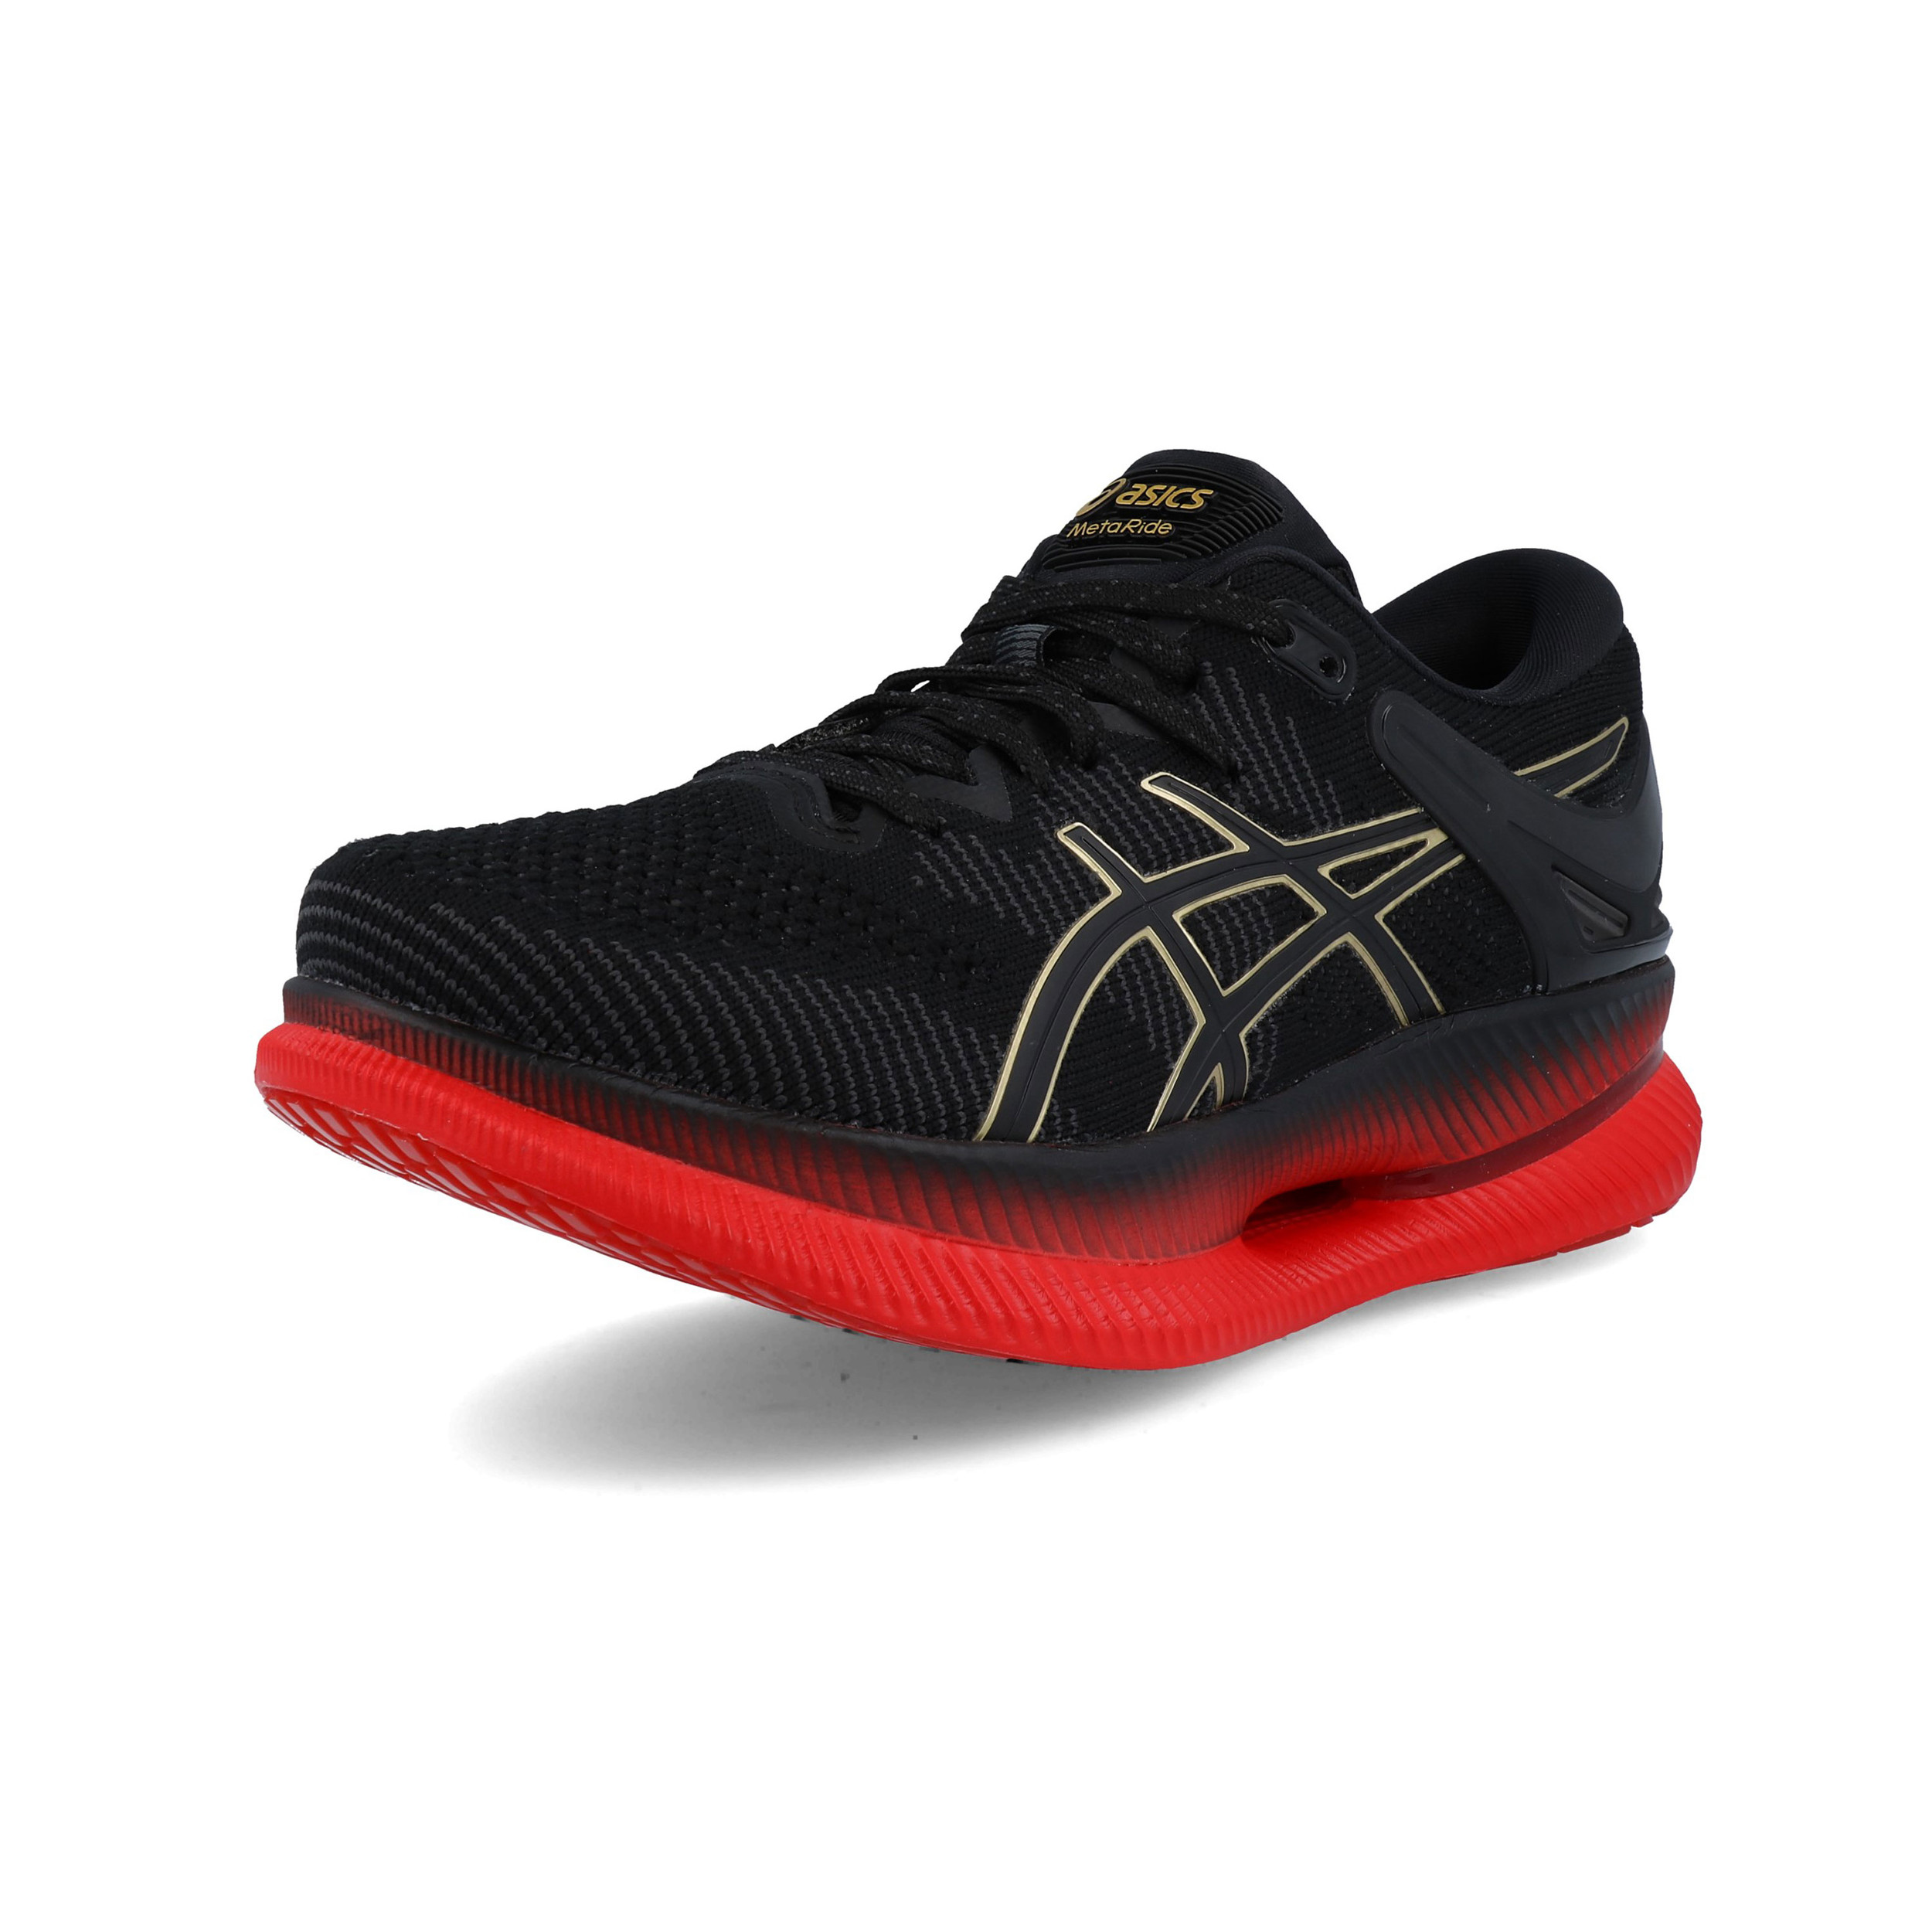 Asics MetaRide Running Shoes | SportsShoes.com